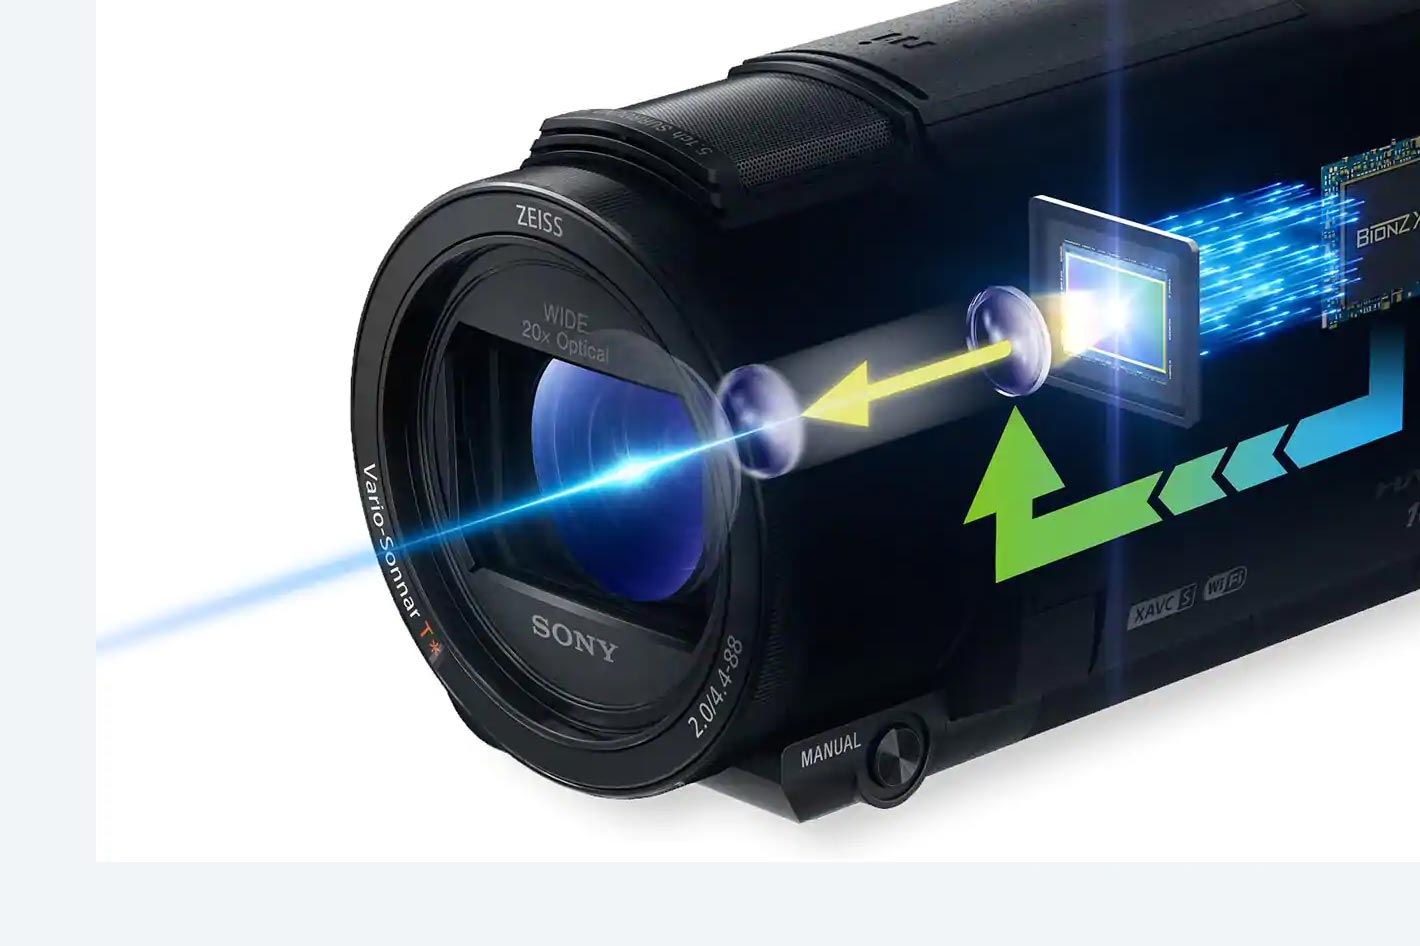 Sony FDR-AX43 a compact 4K Handycam with gimbal inside